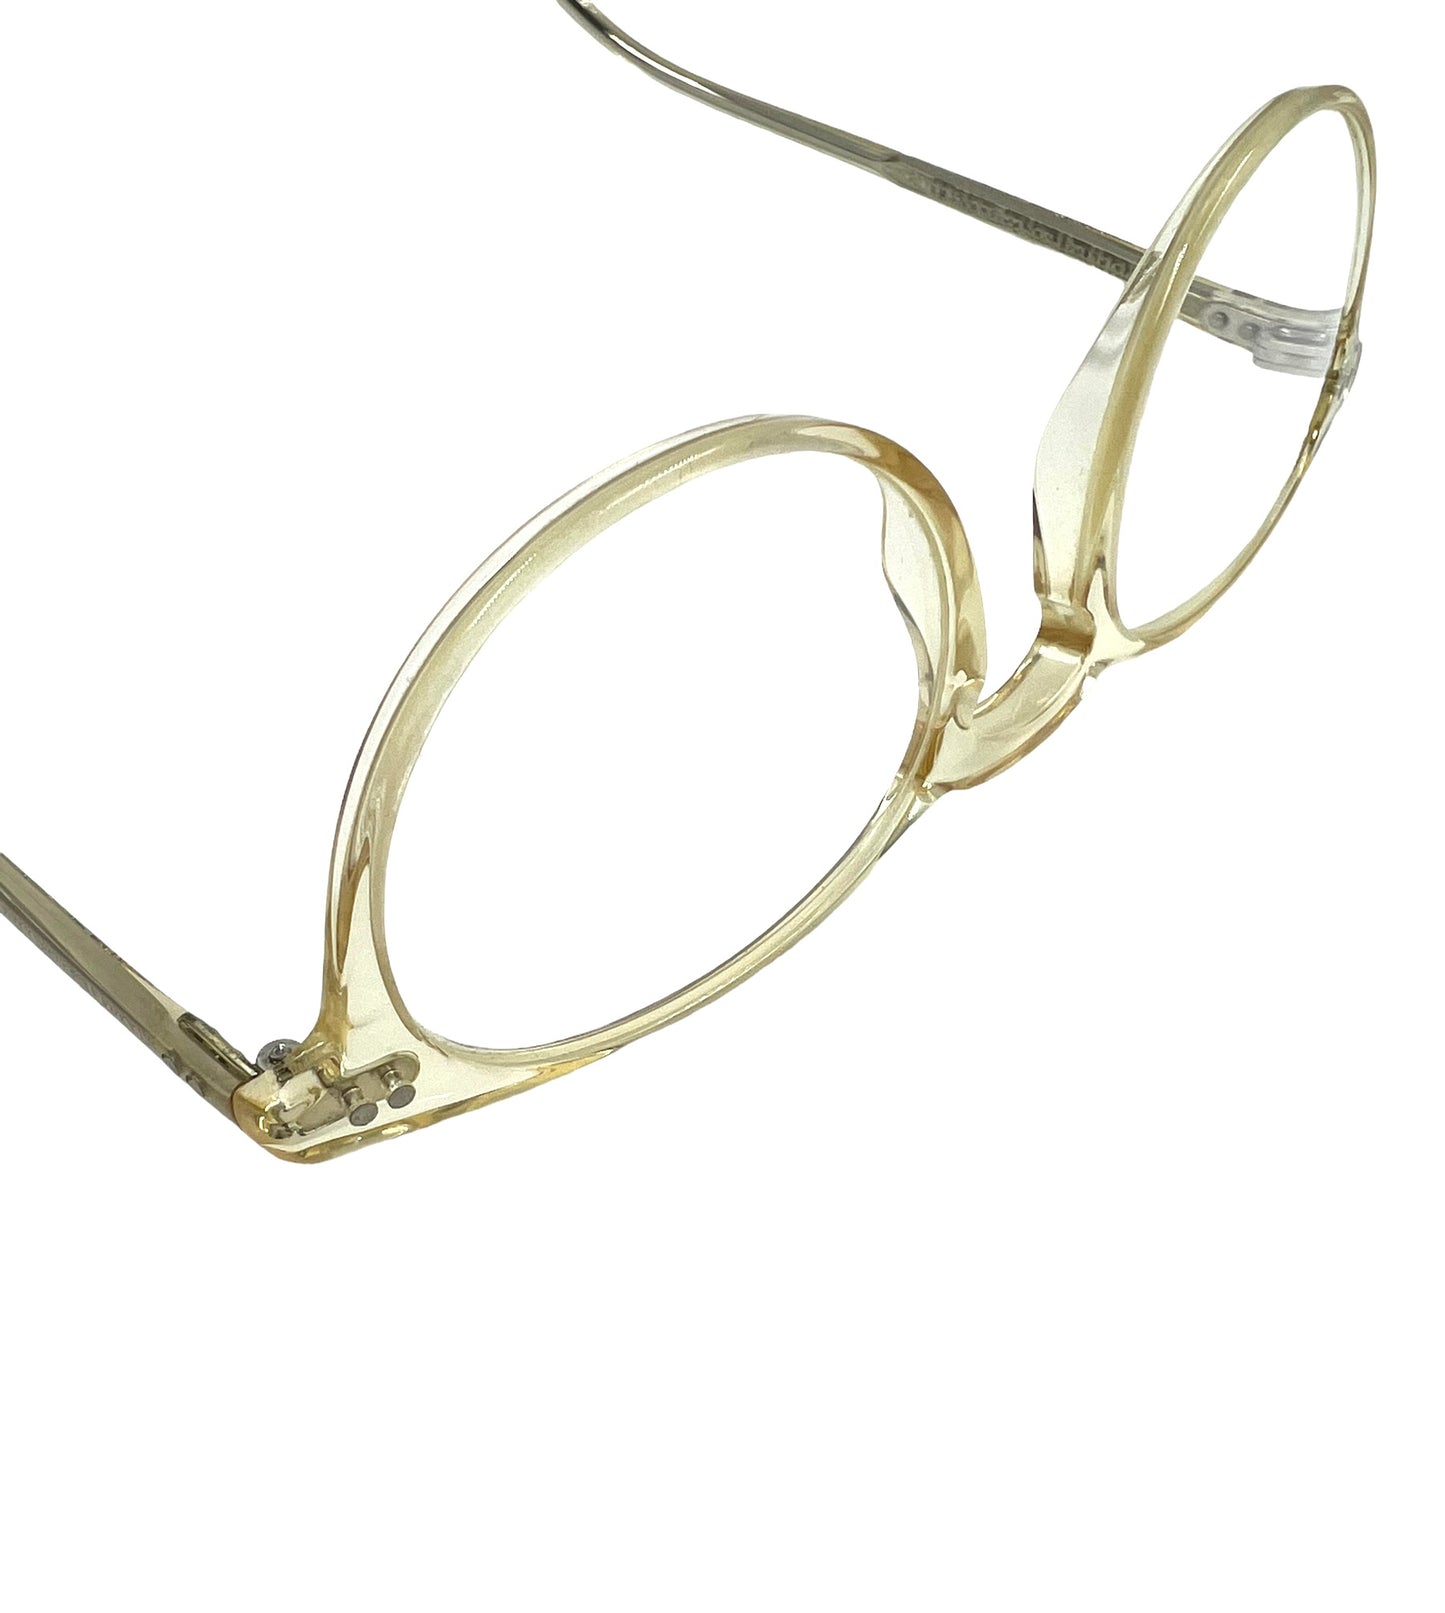 Oliver Peoples Riley-R Beige Opaque Eyeglasses